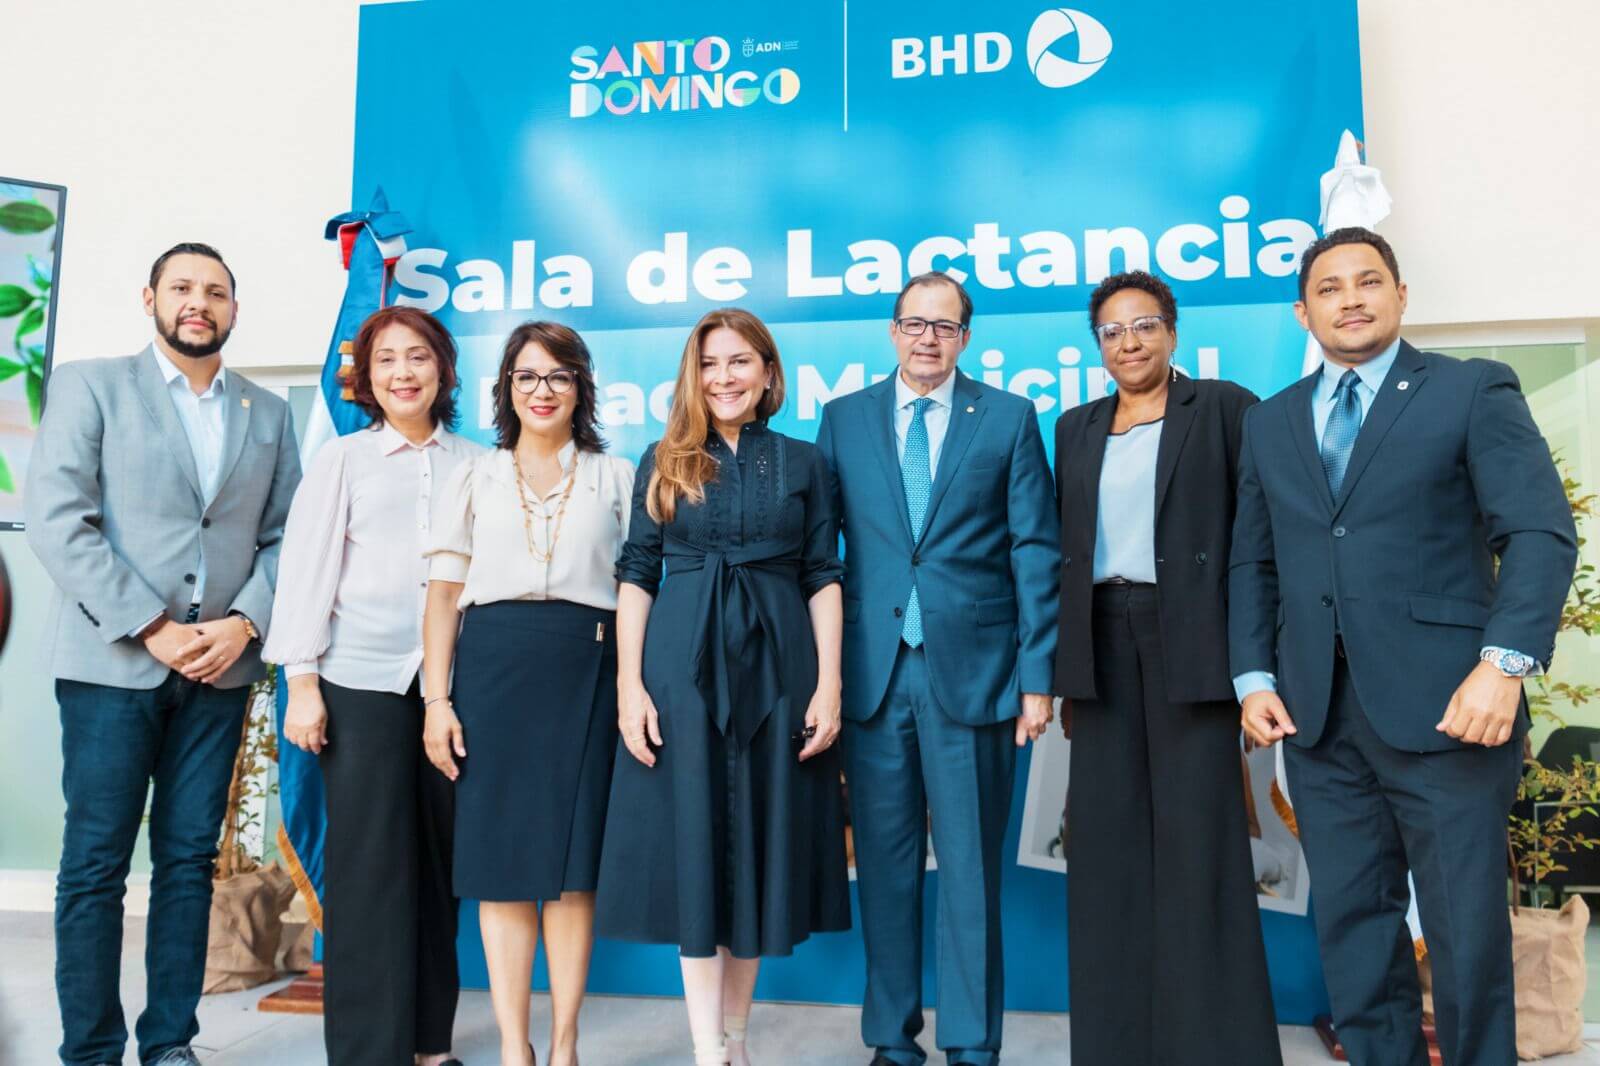 ADN y BHD inauguran primera sala de lactancia municipal